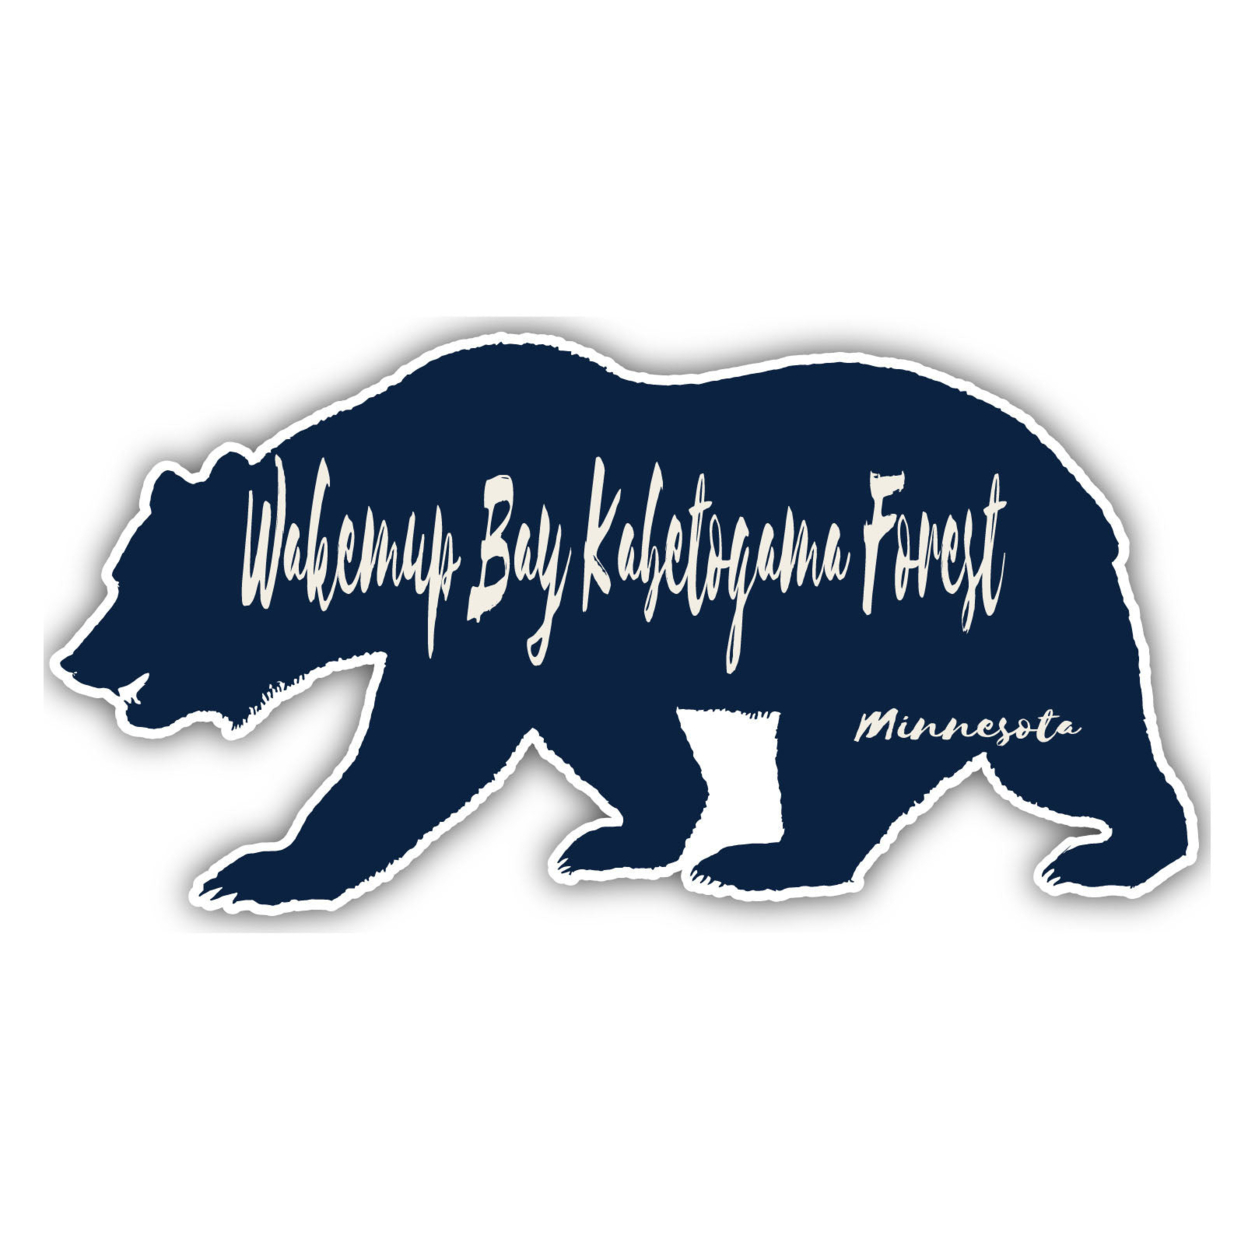 Wakemup Bay Kabetogama Forest Minnesota Souvenir Decorative Stickers (Choose Theme And Size) - Single Unit, 4-Inch, Bear